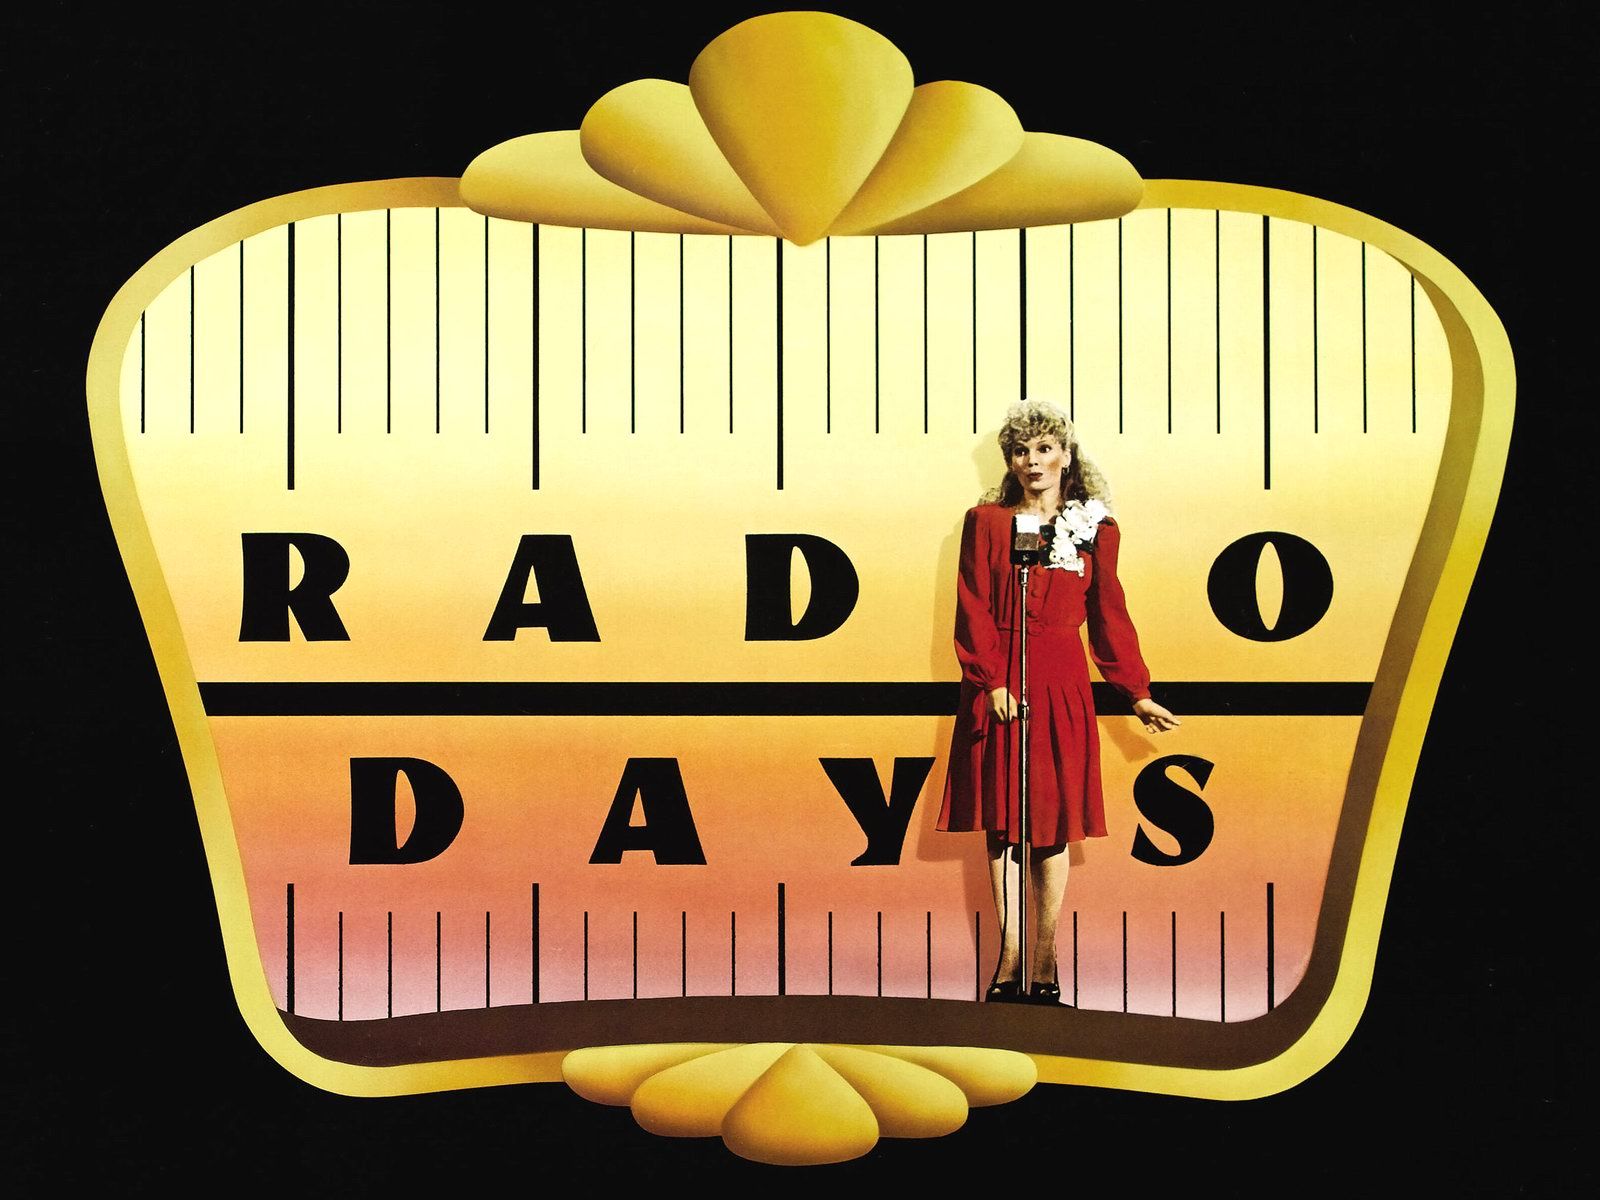 radiodays.jpg (183 KB)